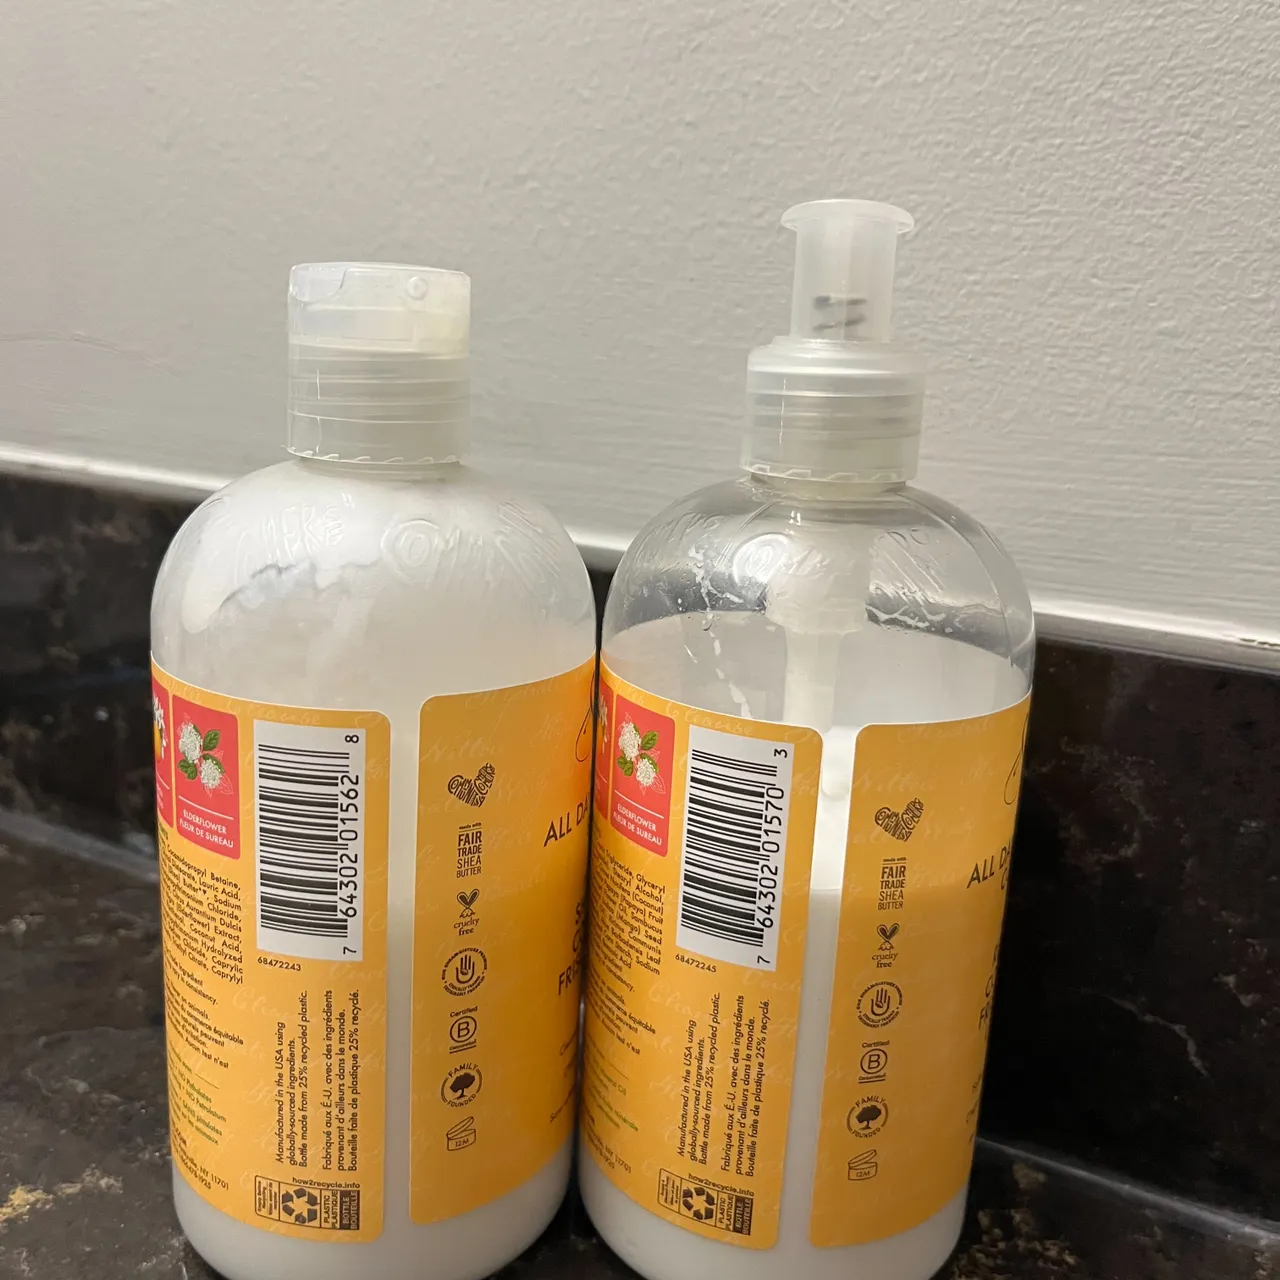 Shea moisture shampoo and conditioner  photo 3